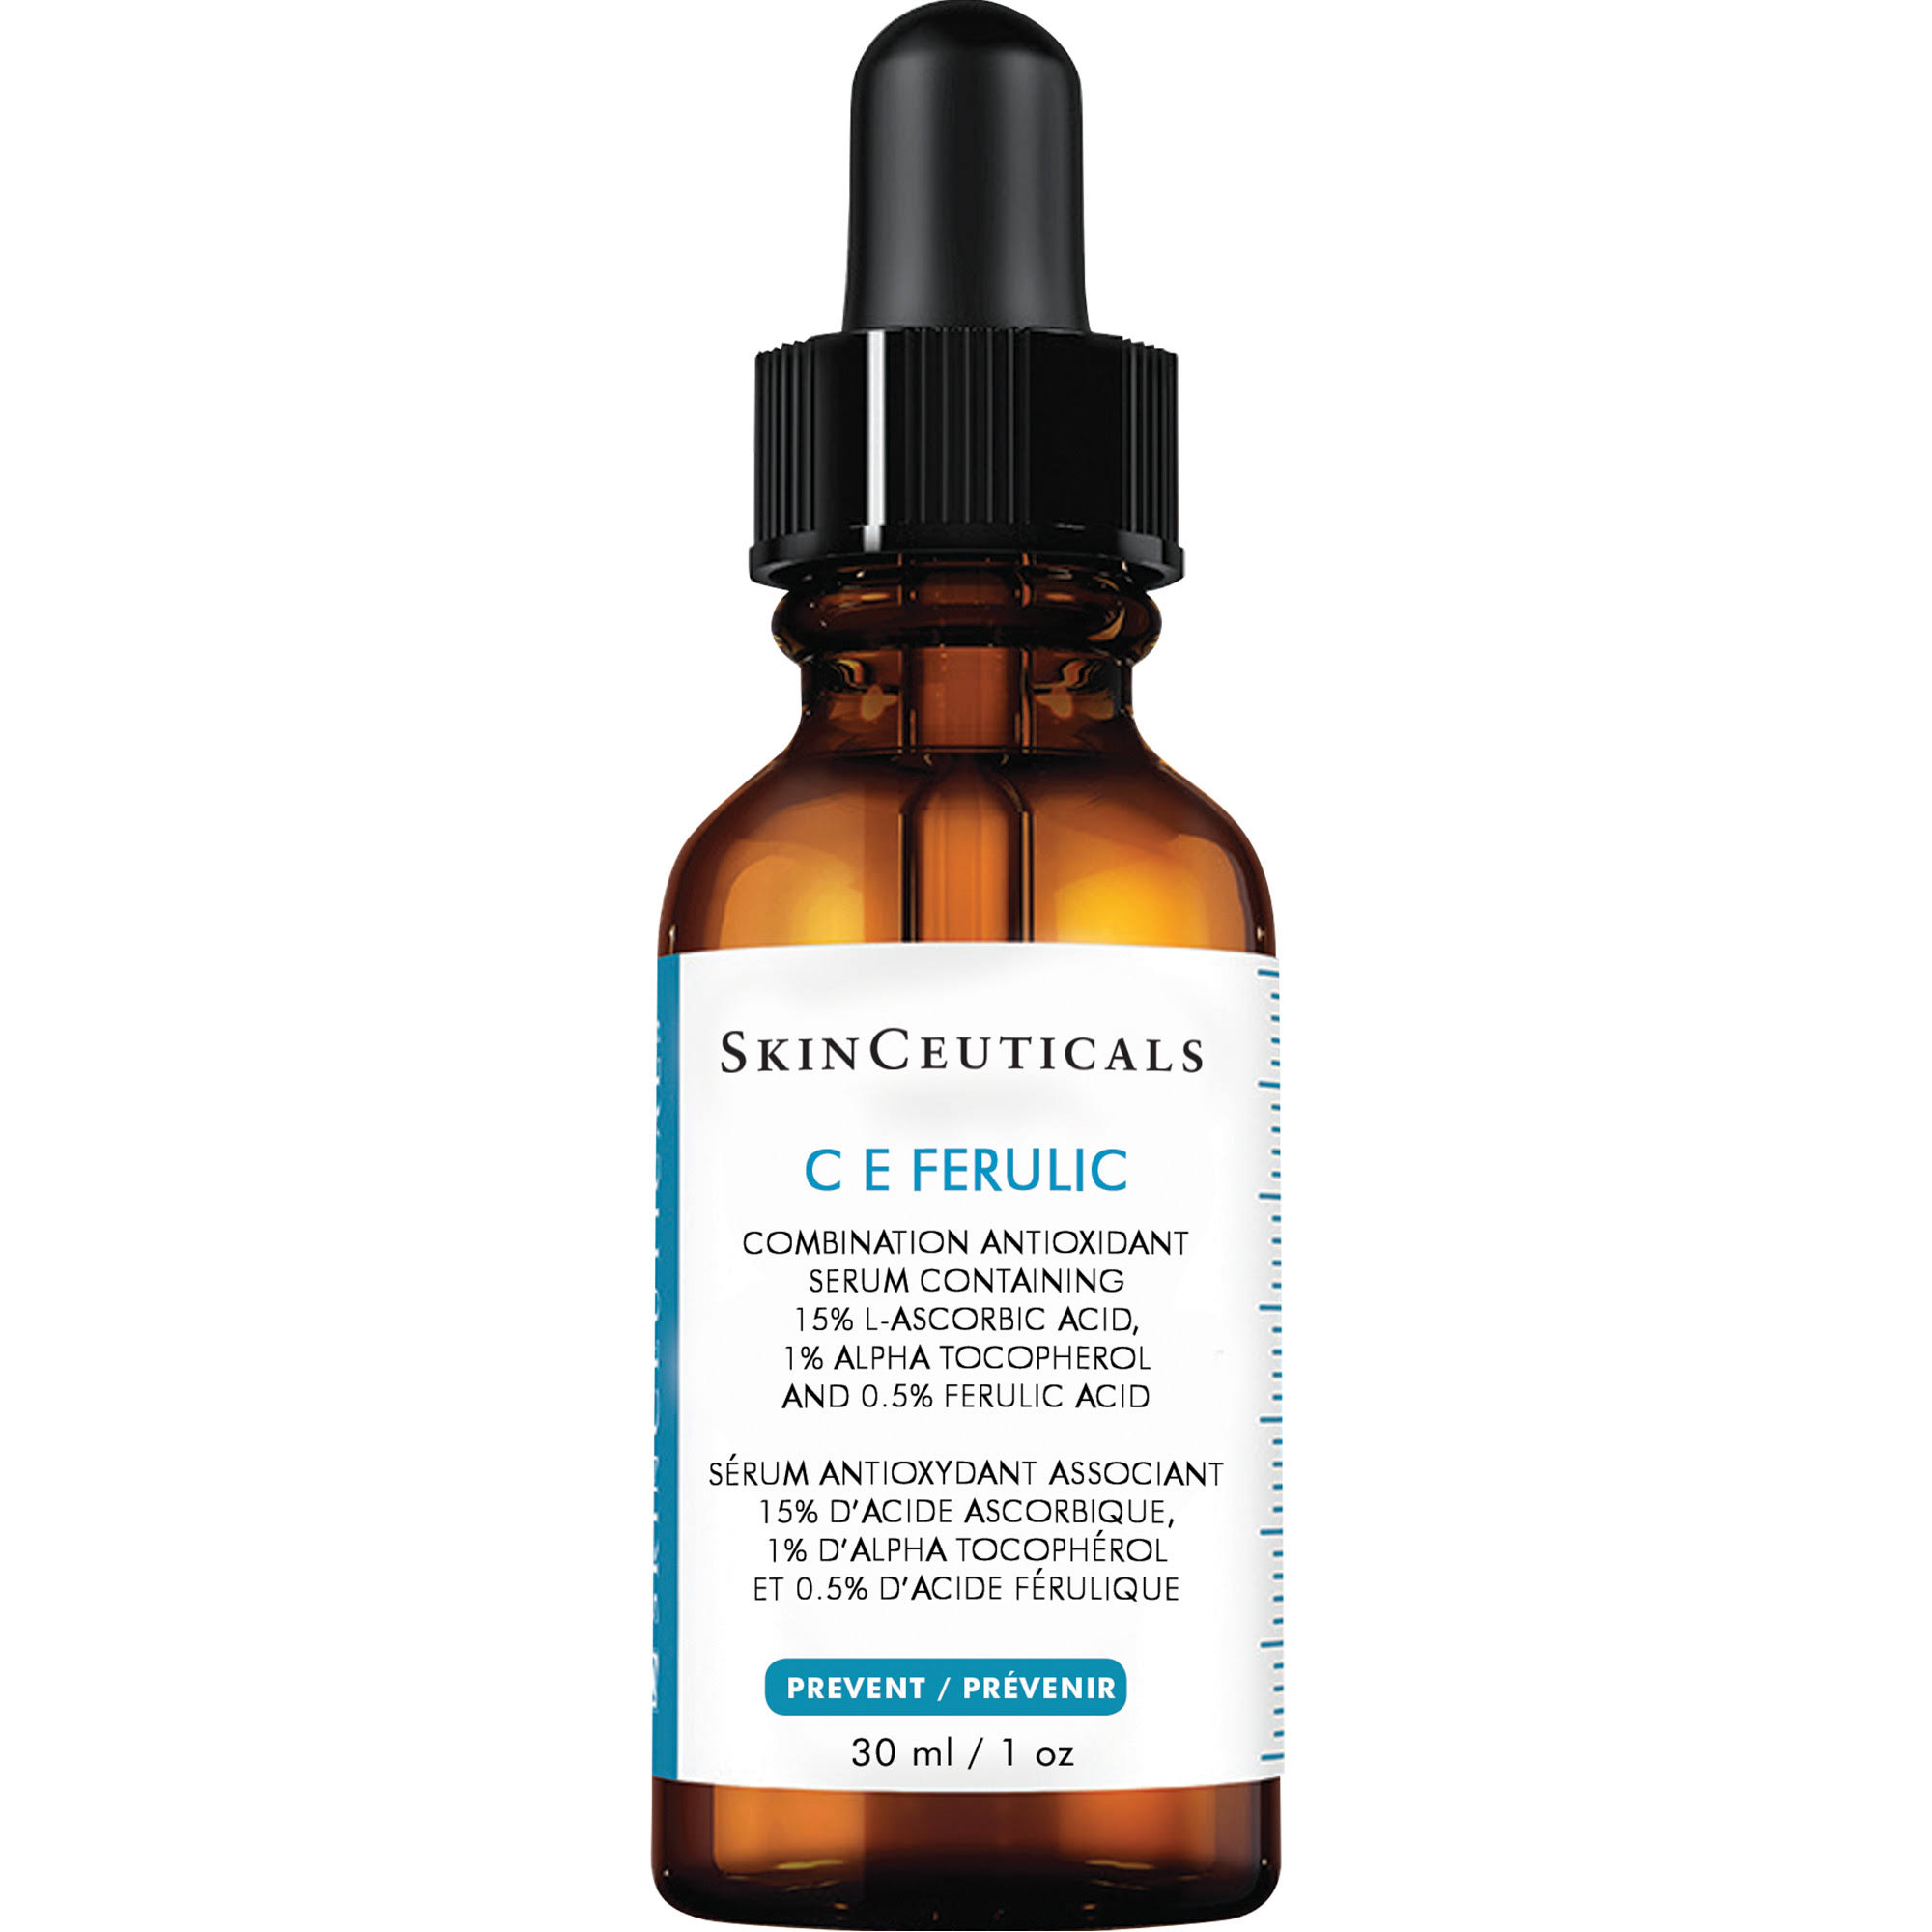 SkinCeuticals C E Ferulic Combination Antioxidant Treatment - 30ml